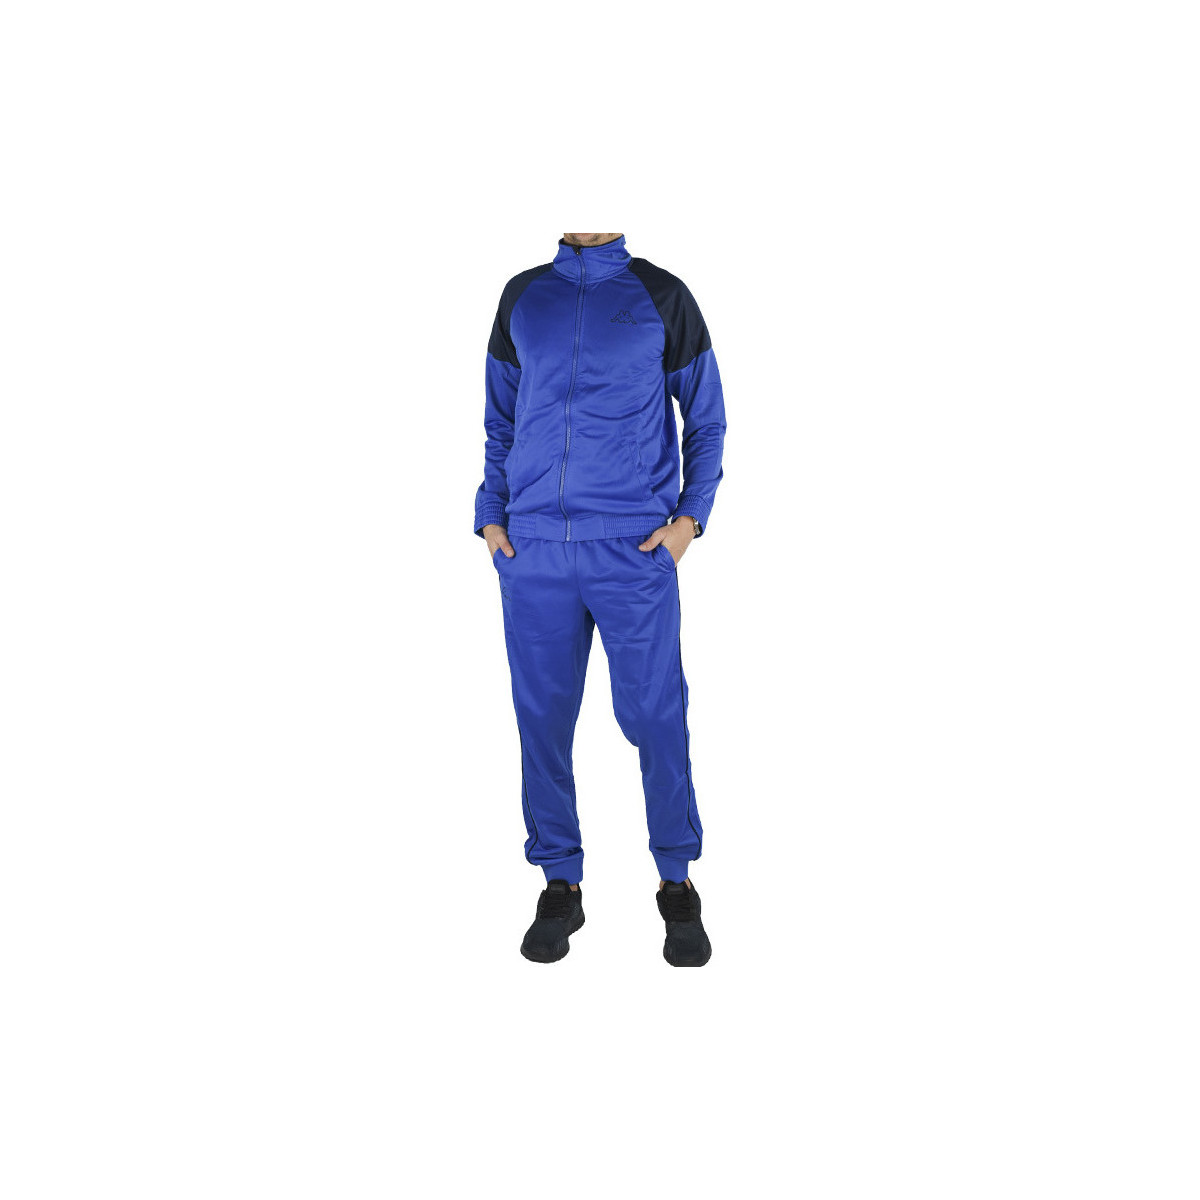 Kleidung Herren Jogginganzüge Kappa Ulfinno Training Suit Blau